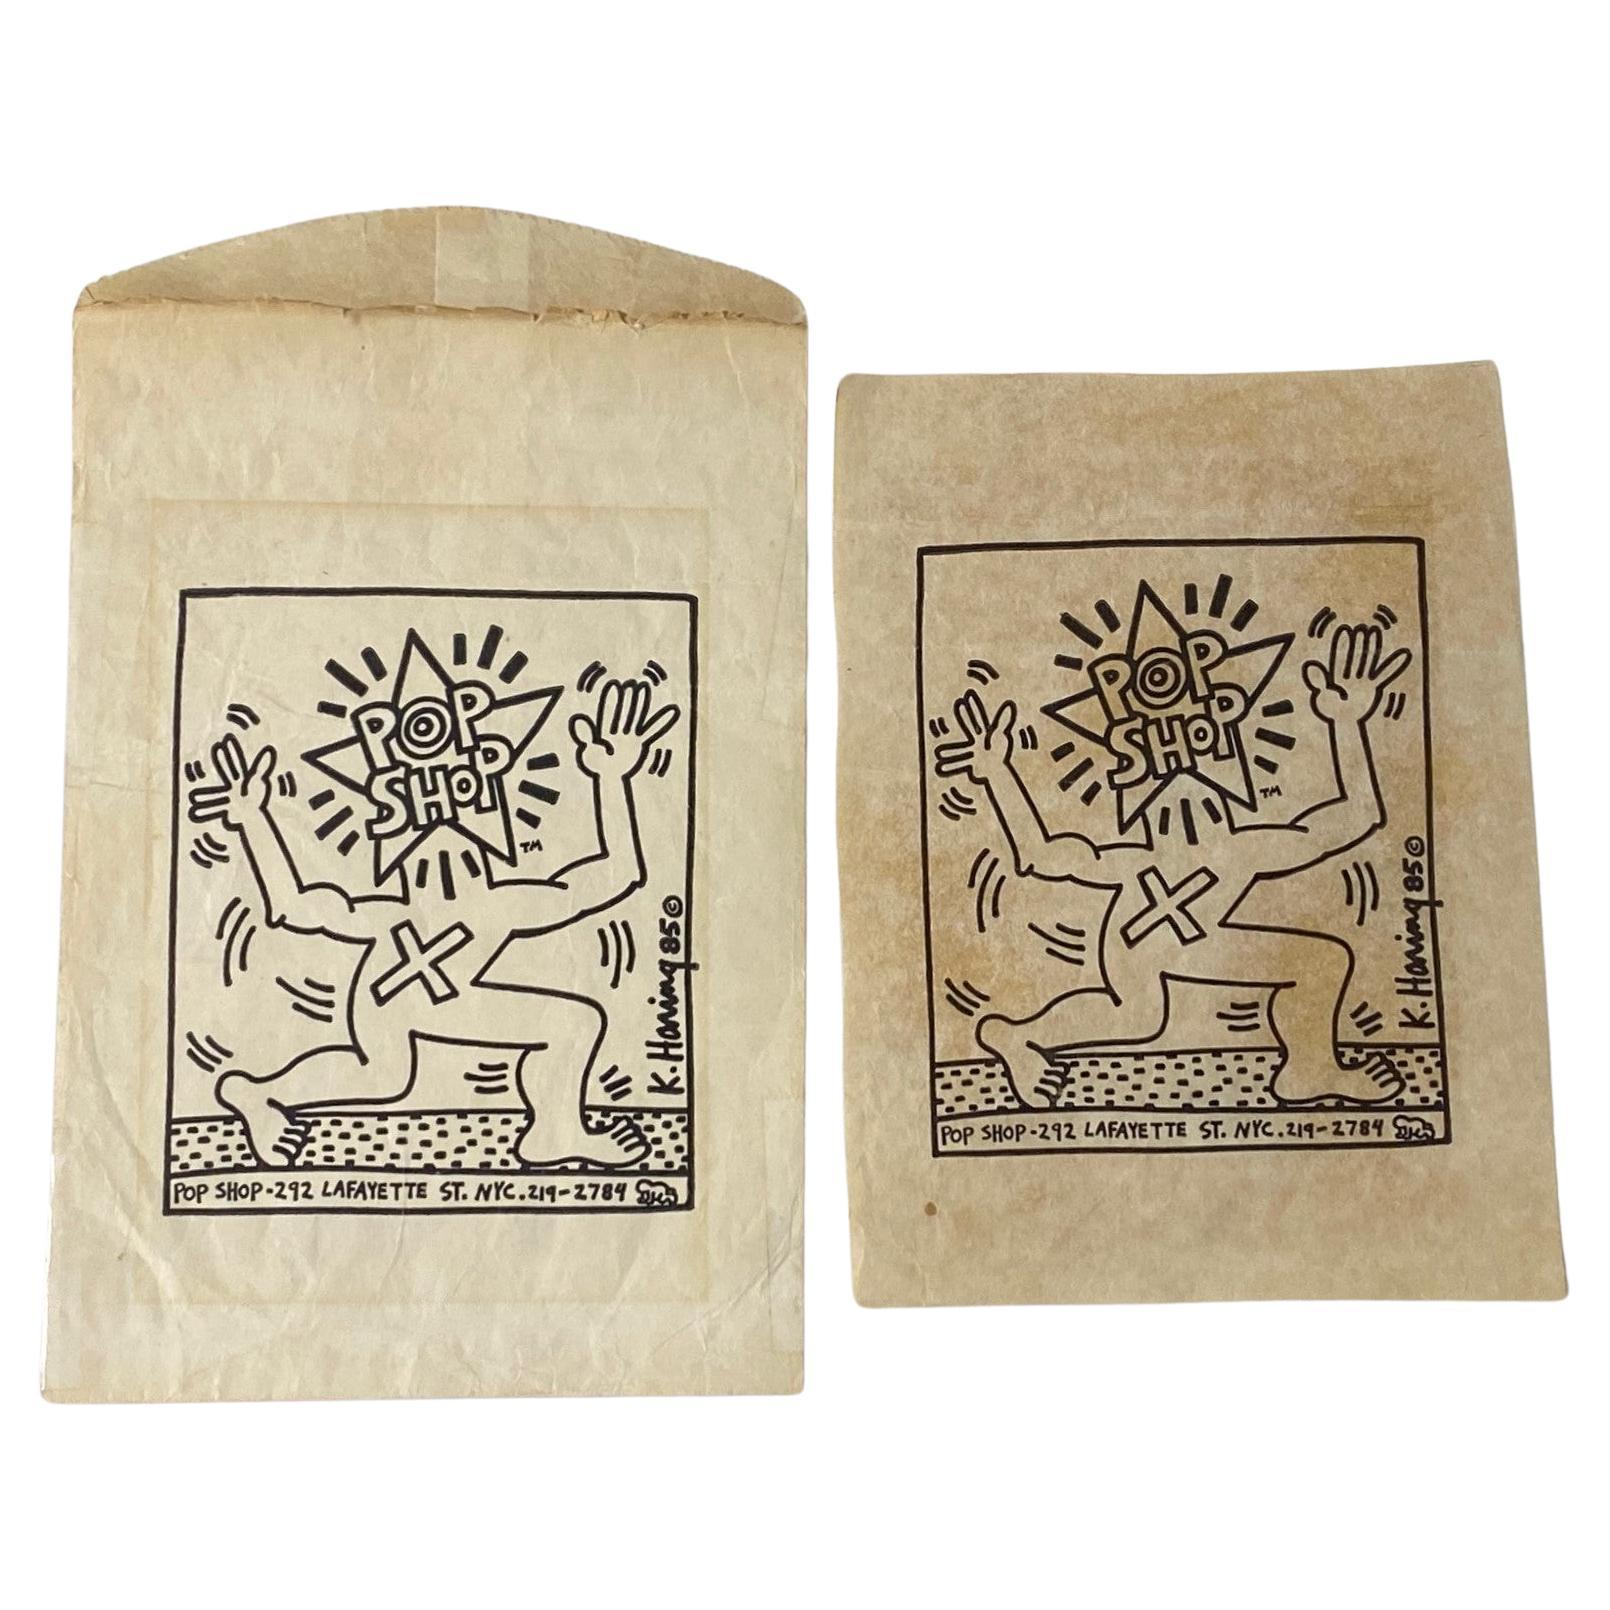 Keith Haring Original New York City Pop Shop Lithograph Bag With Bonus, 1980s